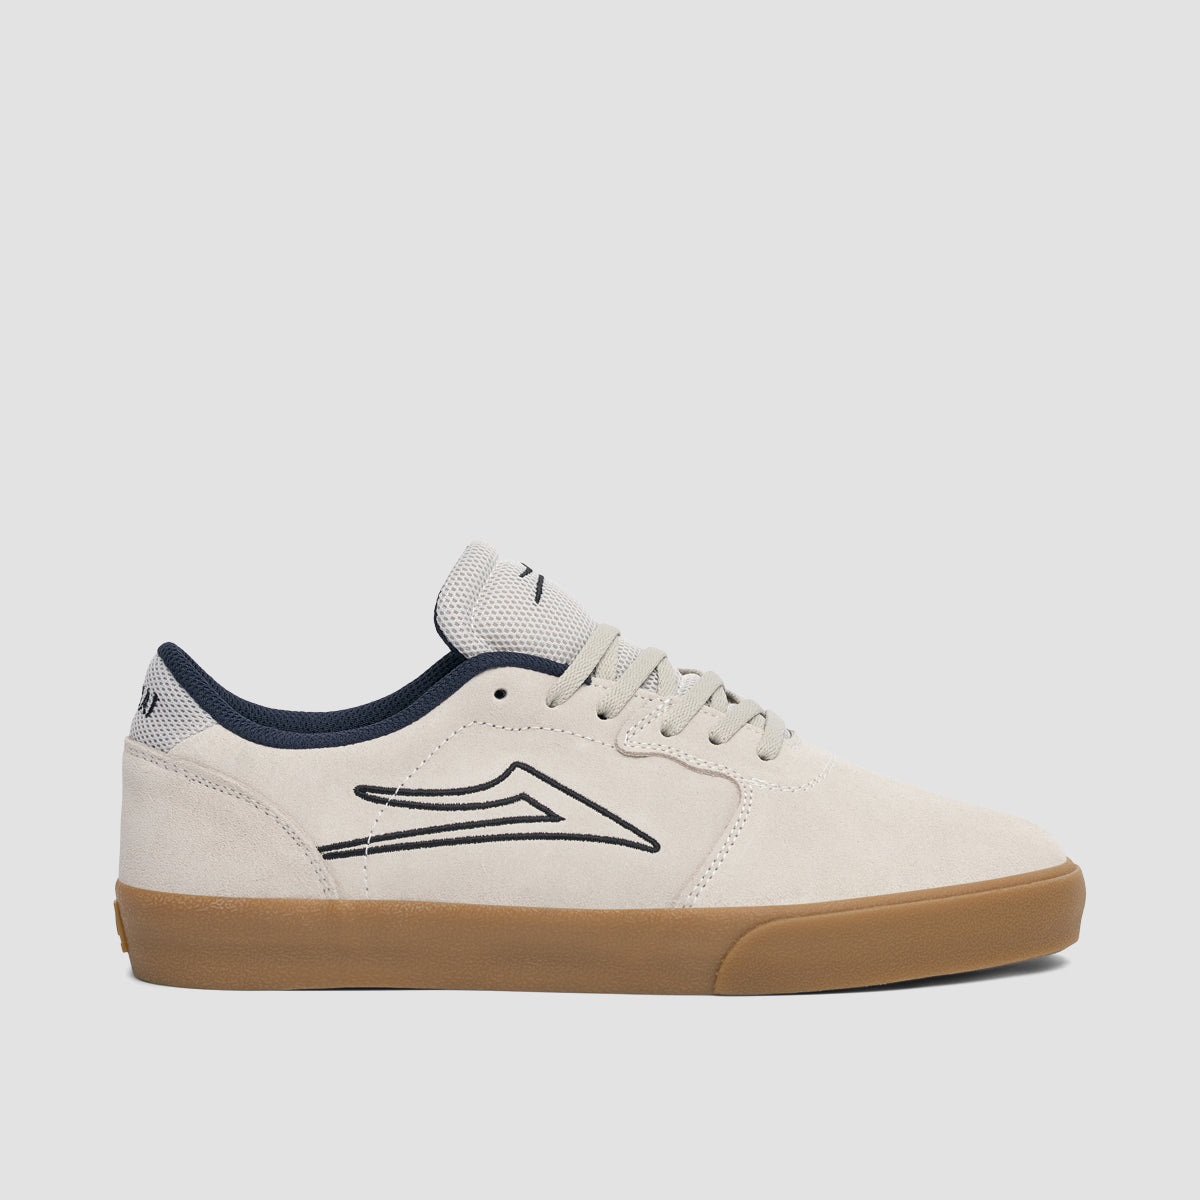 Lakai Cardiff Shoes - White/Gum Suede